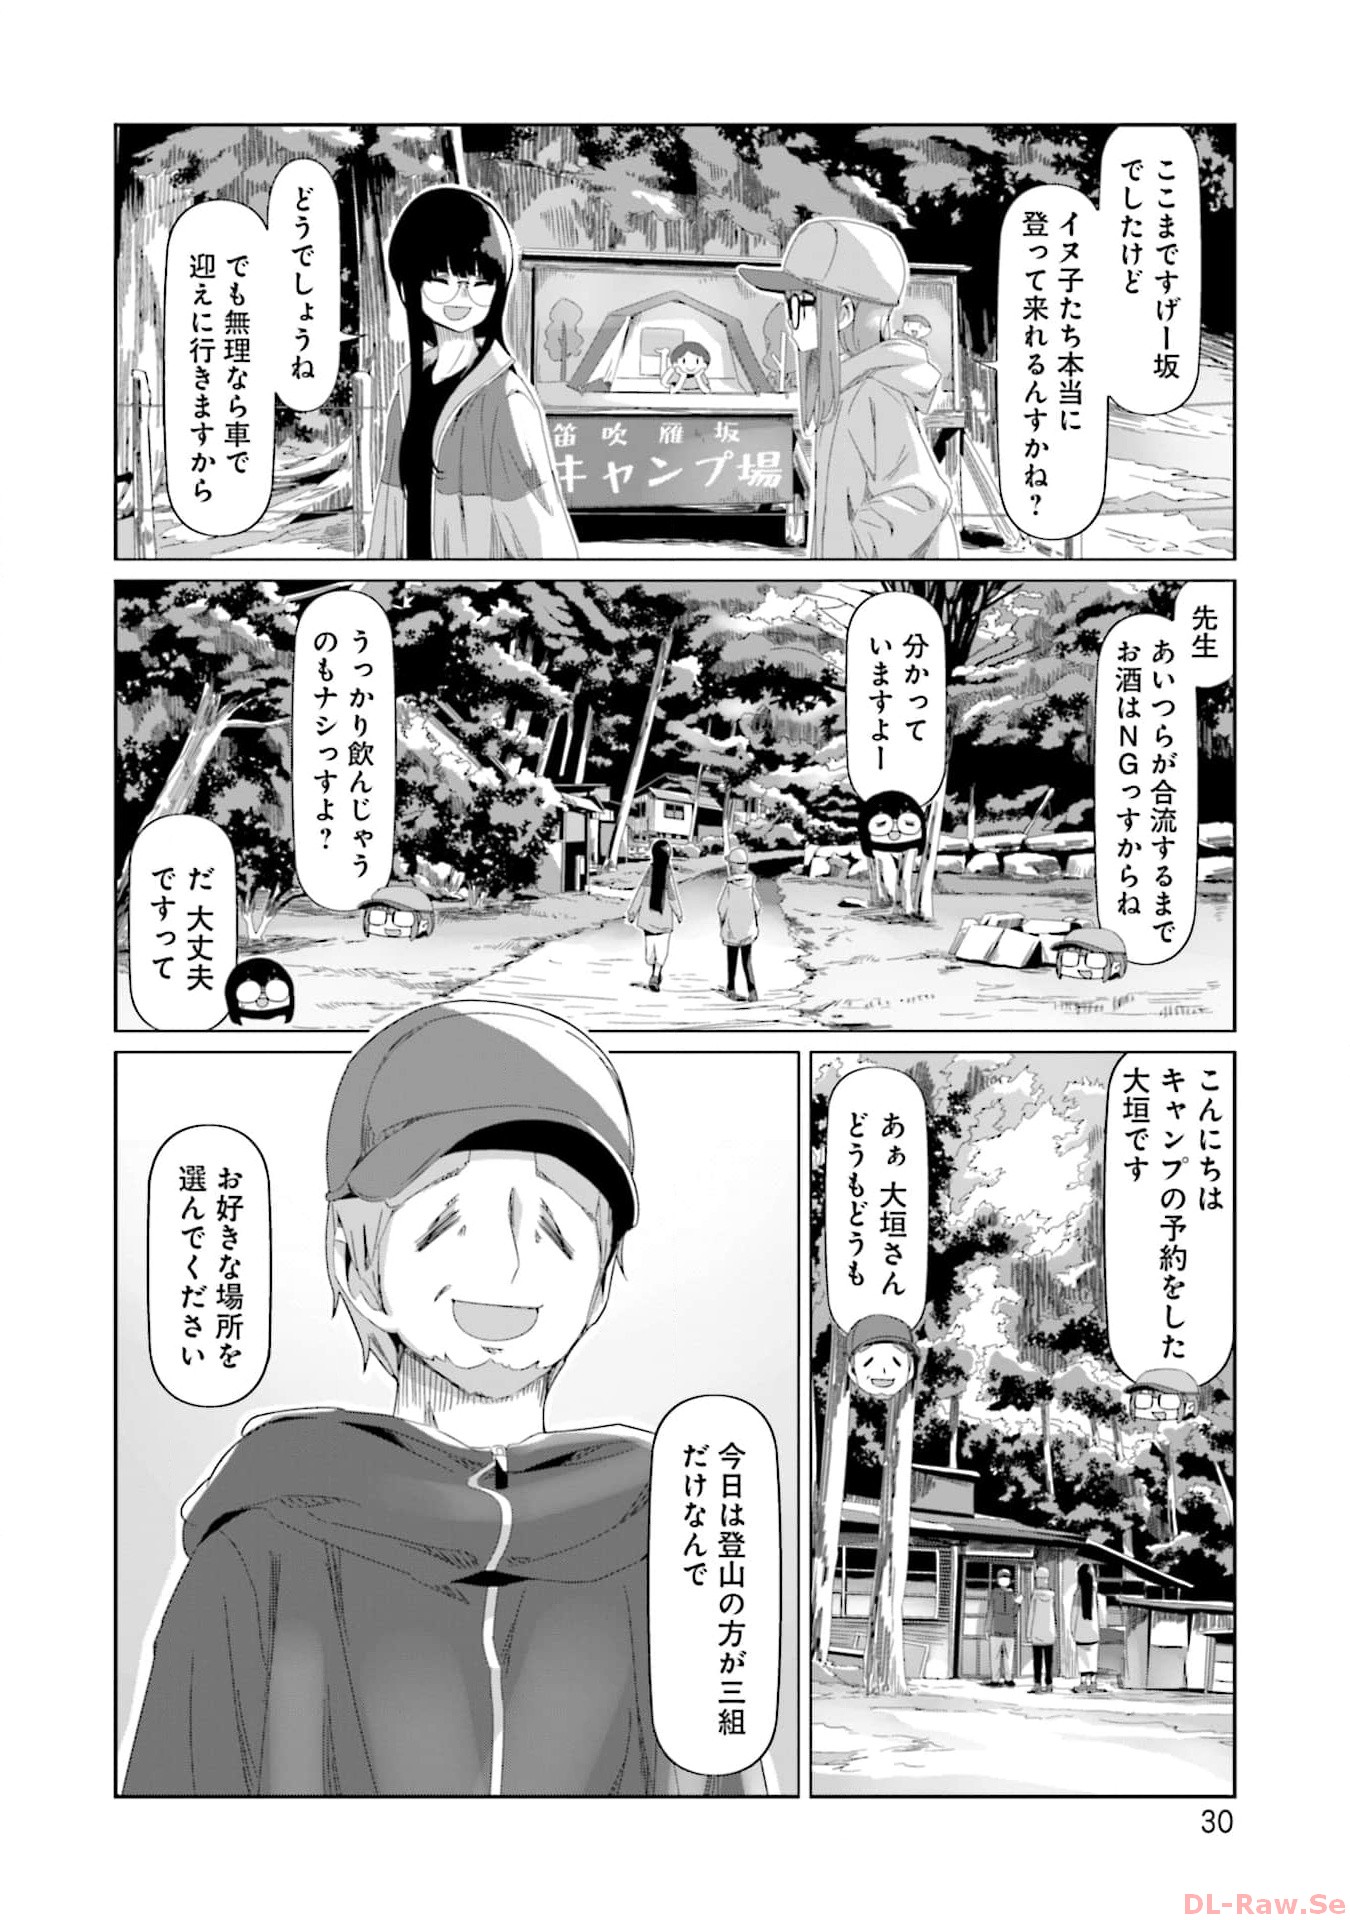 Yuru Camp - Chapter 83 - Page 2